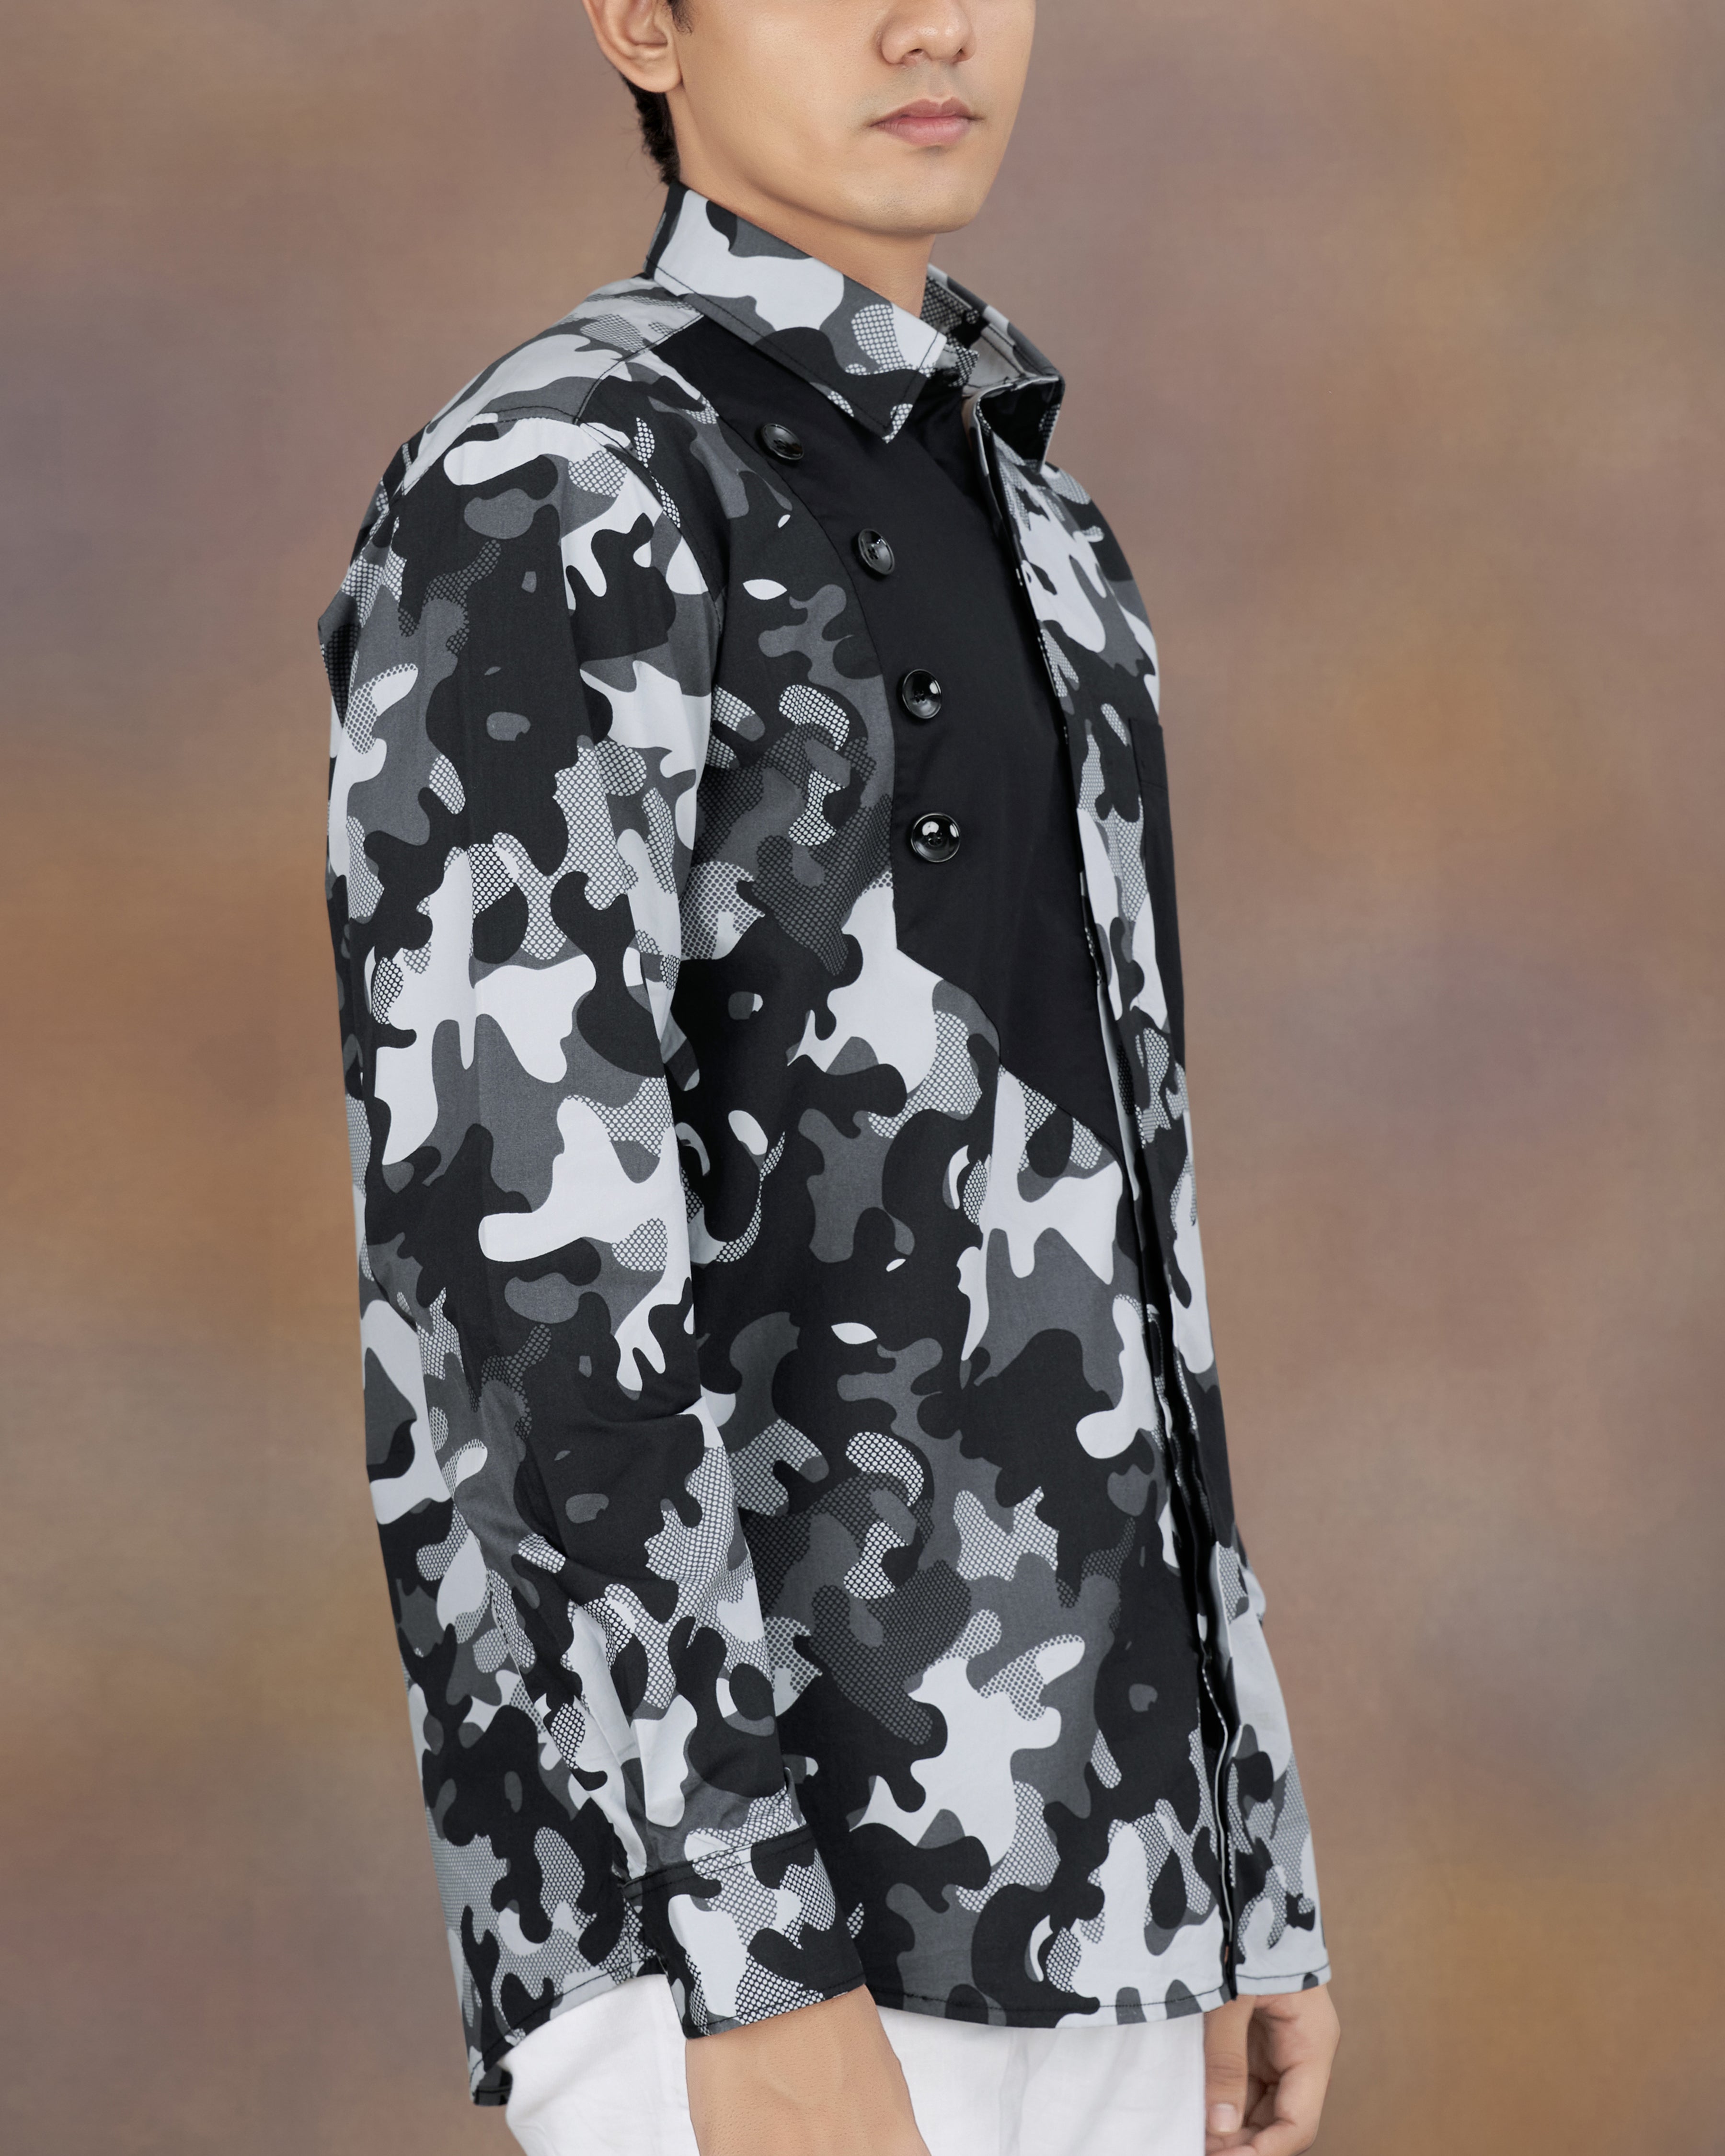 Gunmetal Gray with Black and White Camouflage Printed Premium Tencel Designer Shirt